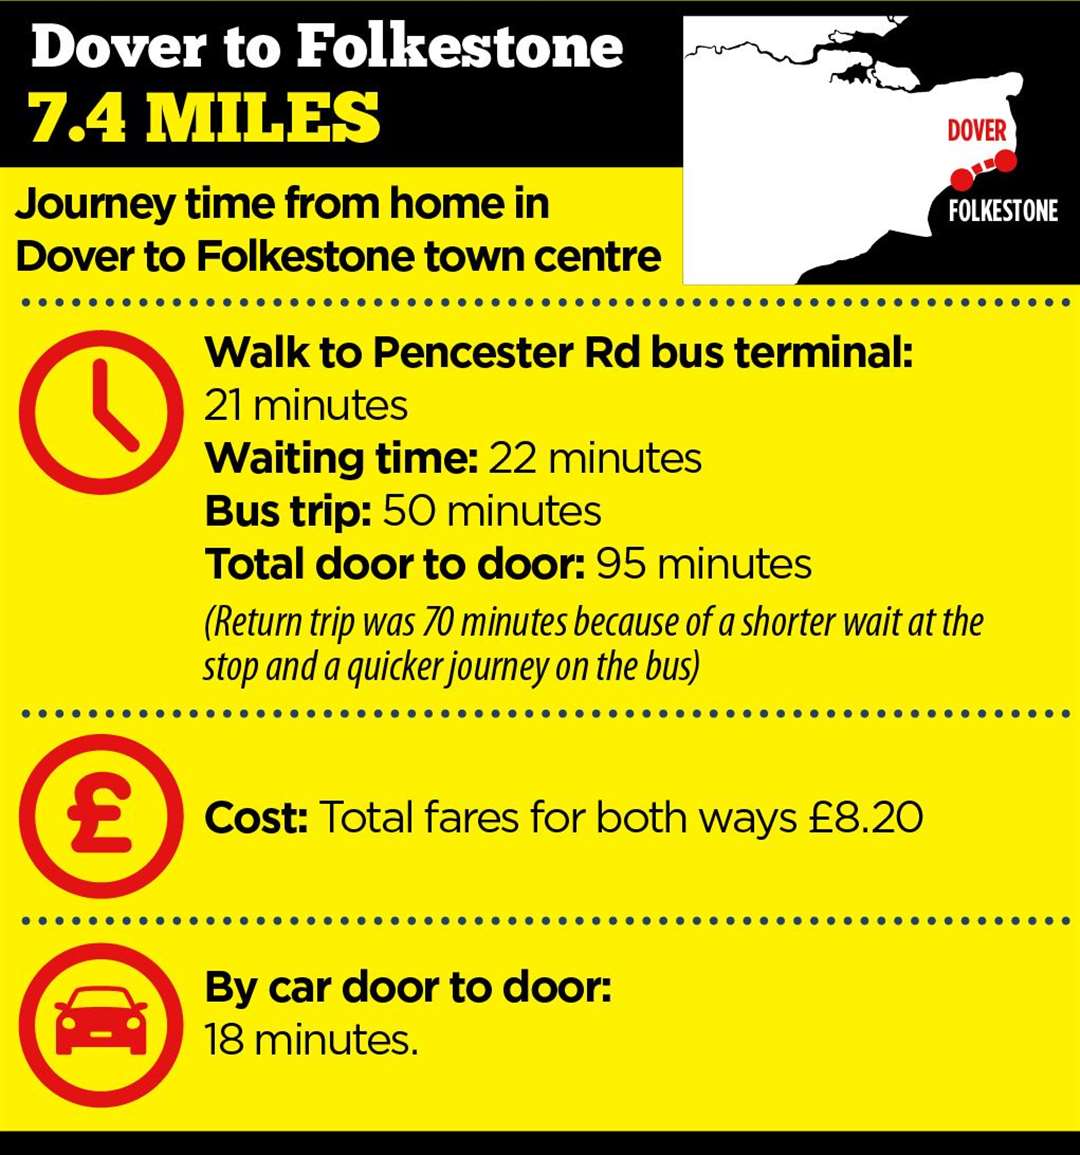 The bus trip to Folkestone